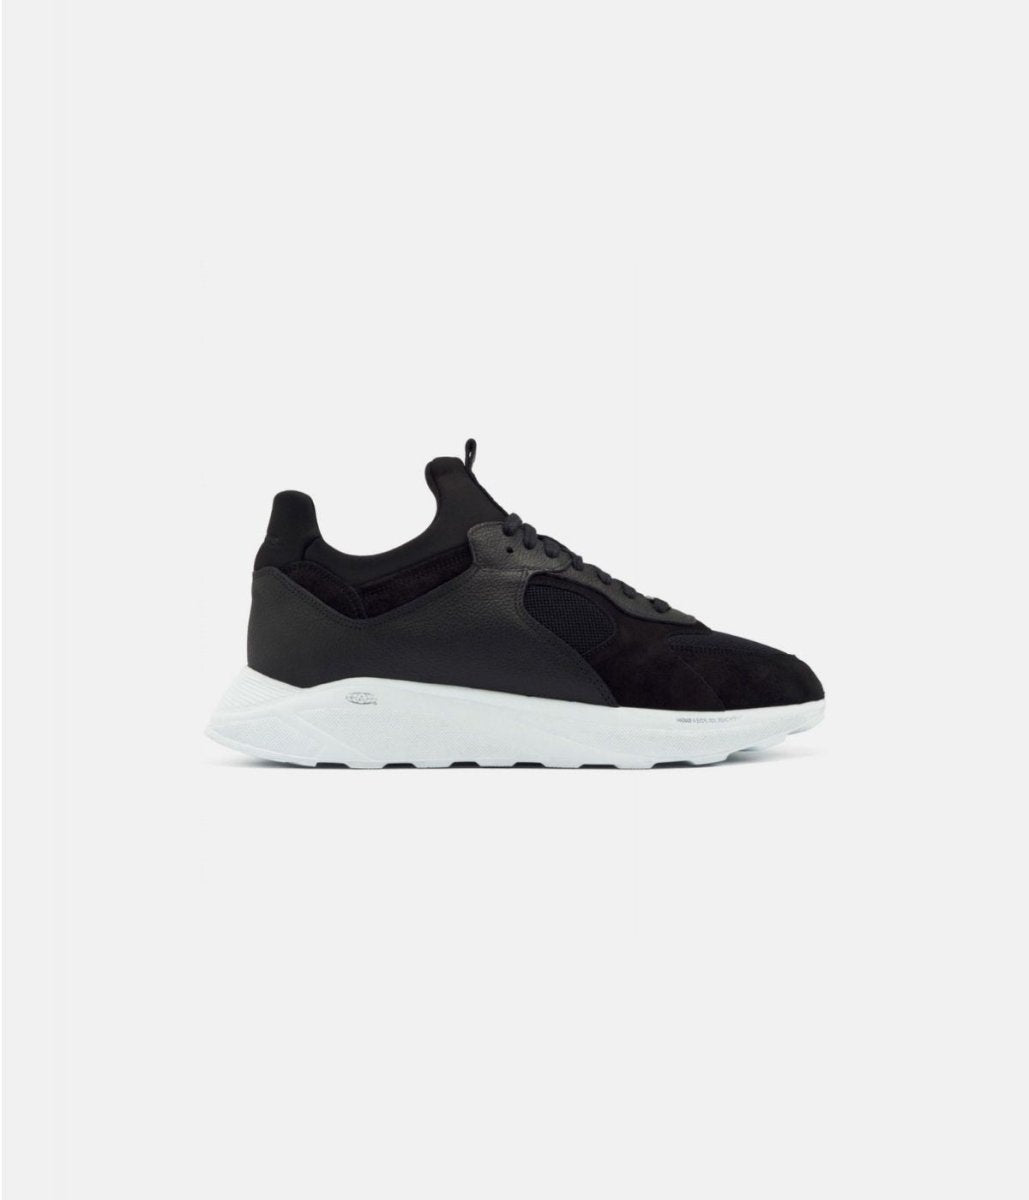 Larch BLACK - ekn footwear - MALA - The Concept Store